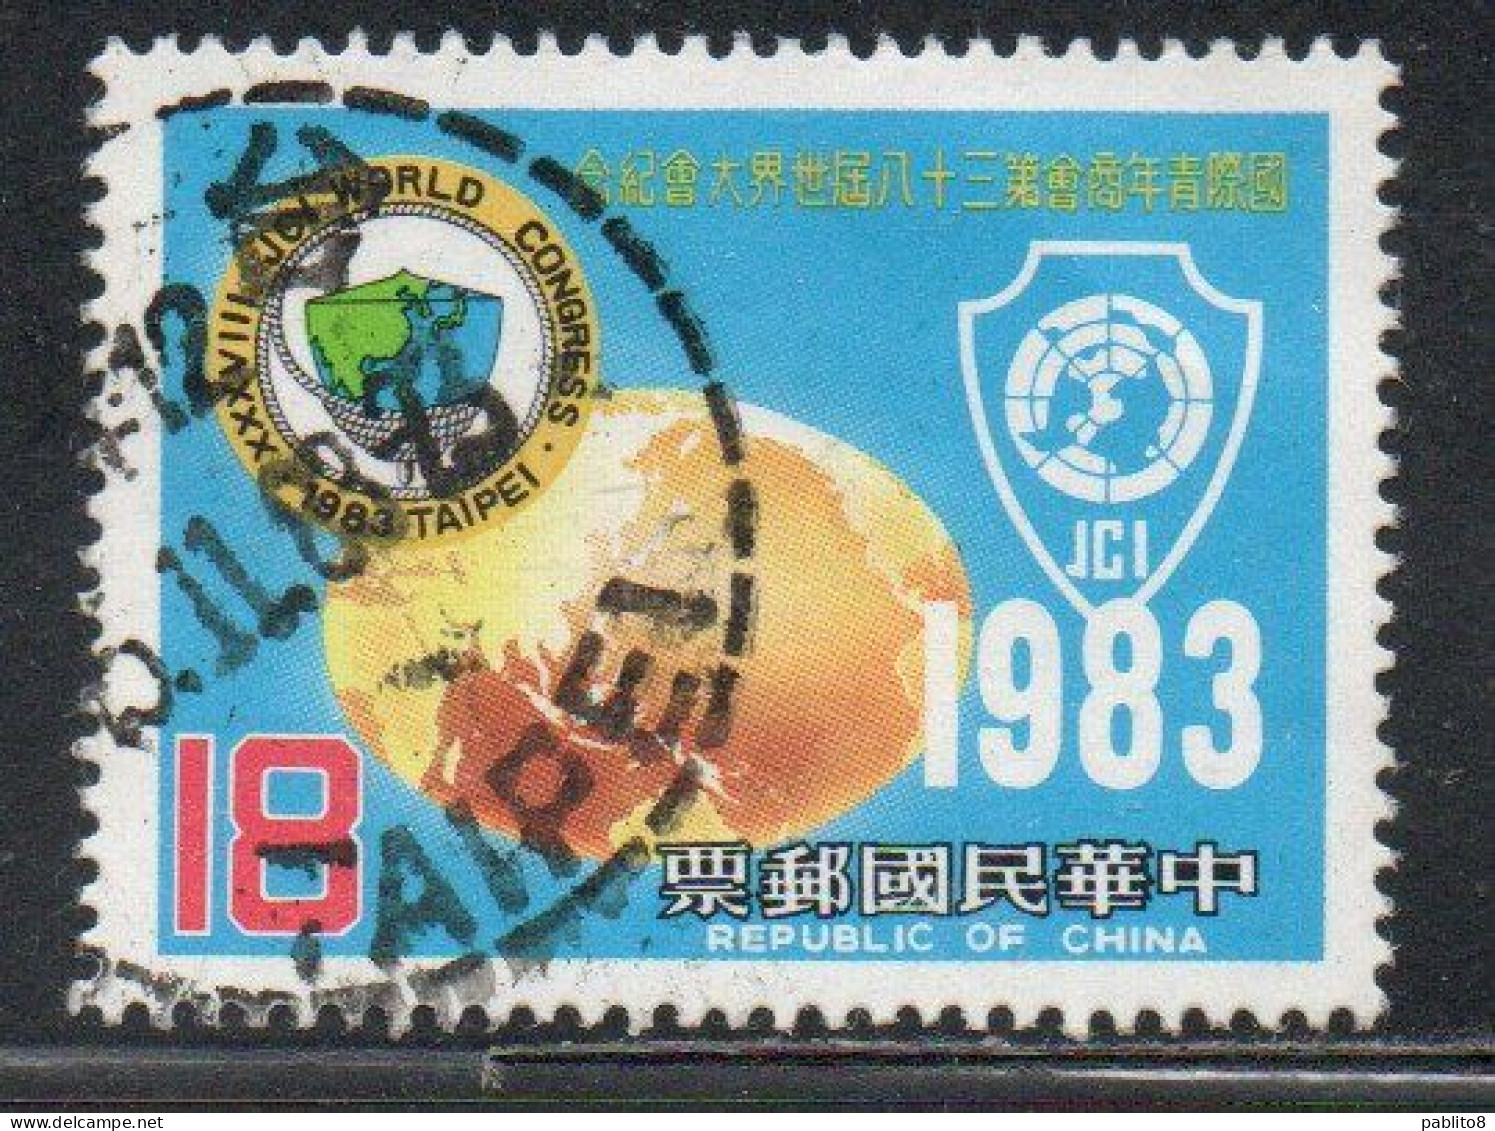 CHINA REPUBLIC CINA TAIWAN FORMOSA 1983 JCI JAYCEES INTERNATIONAL WORLD CONGRESS GLOBE EMBLEMS 18$ USED USATO OBLITERE' - Gebraucht